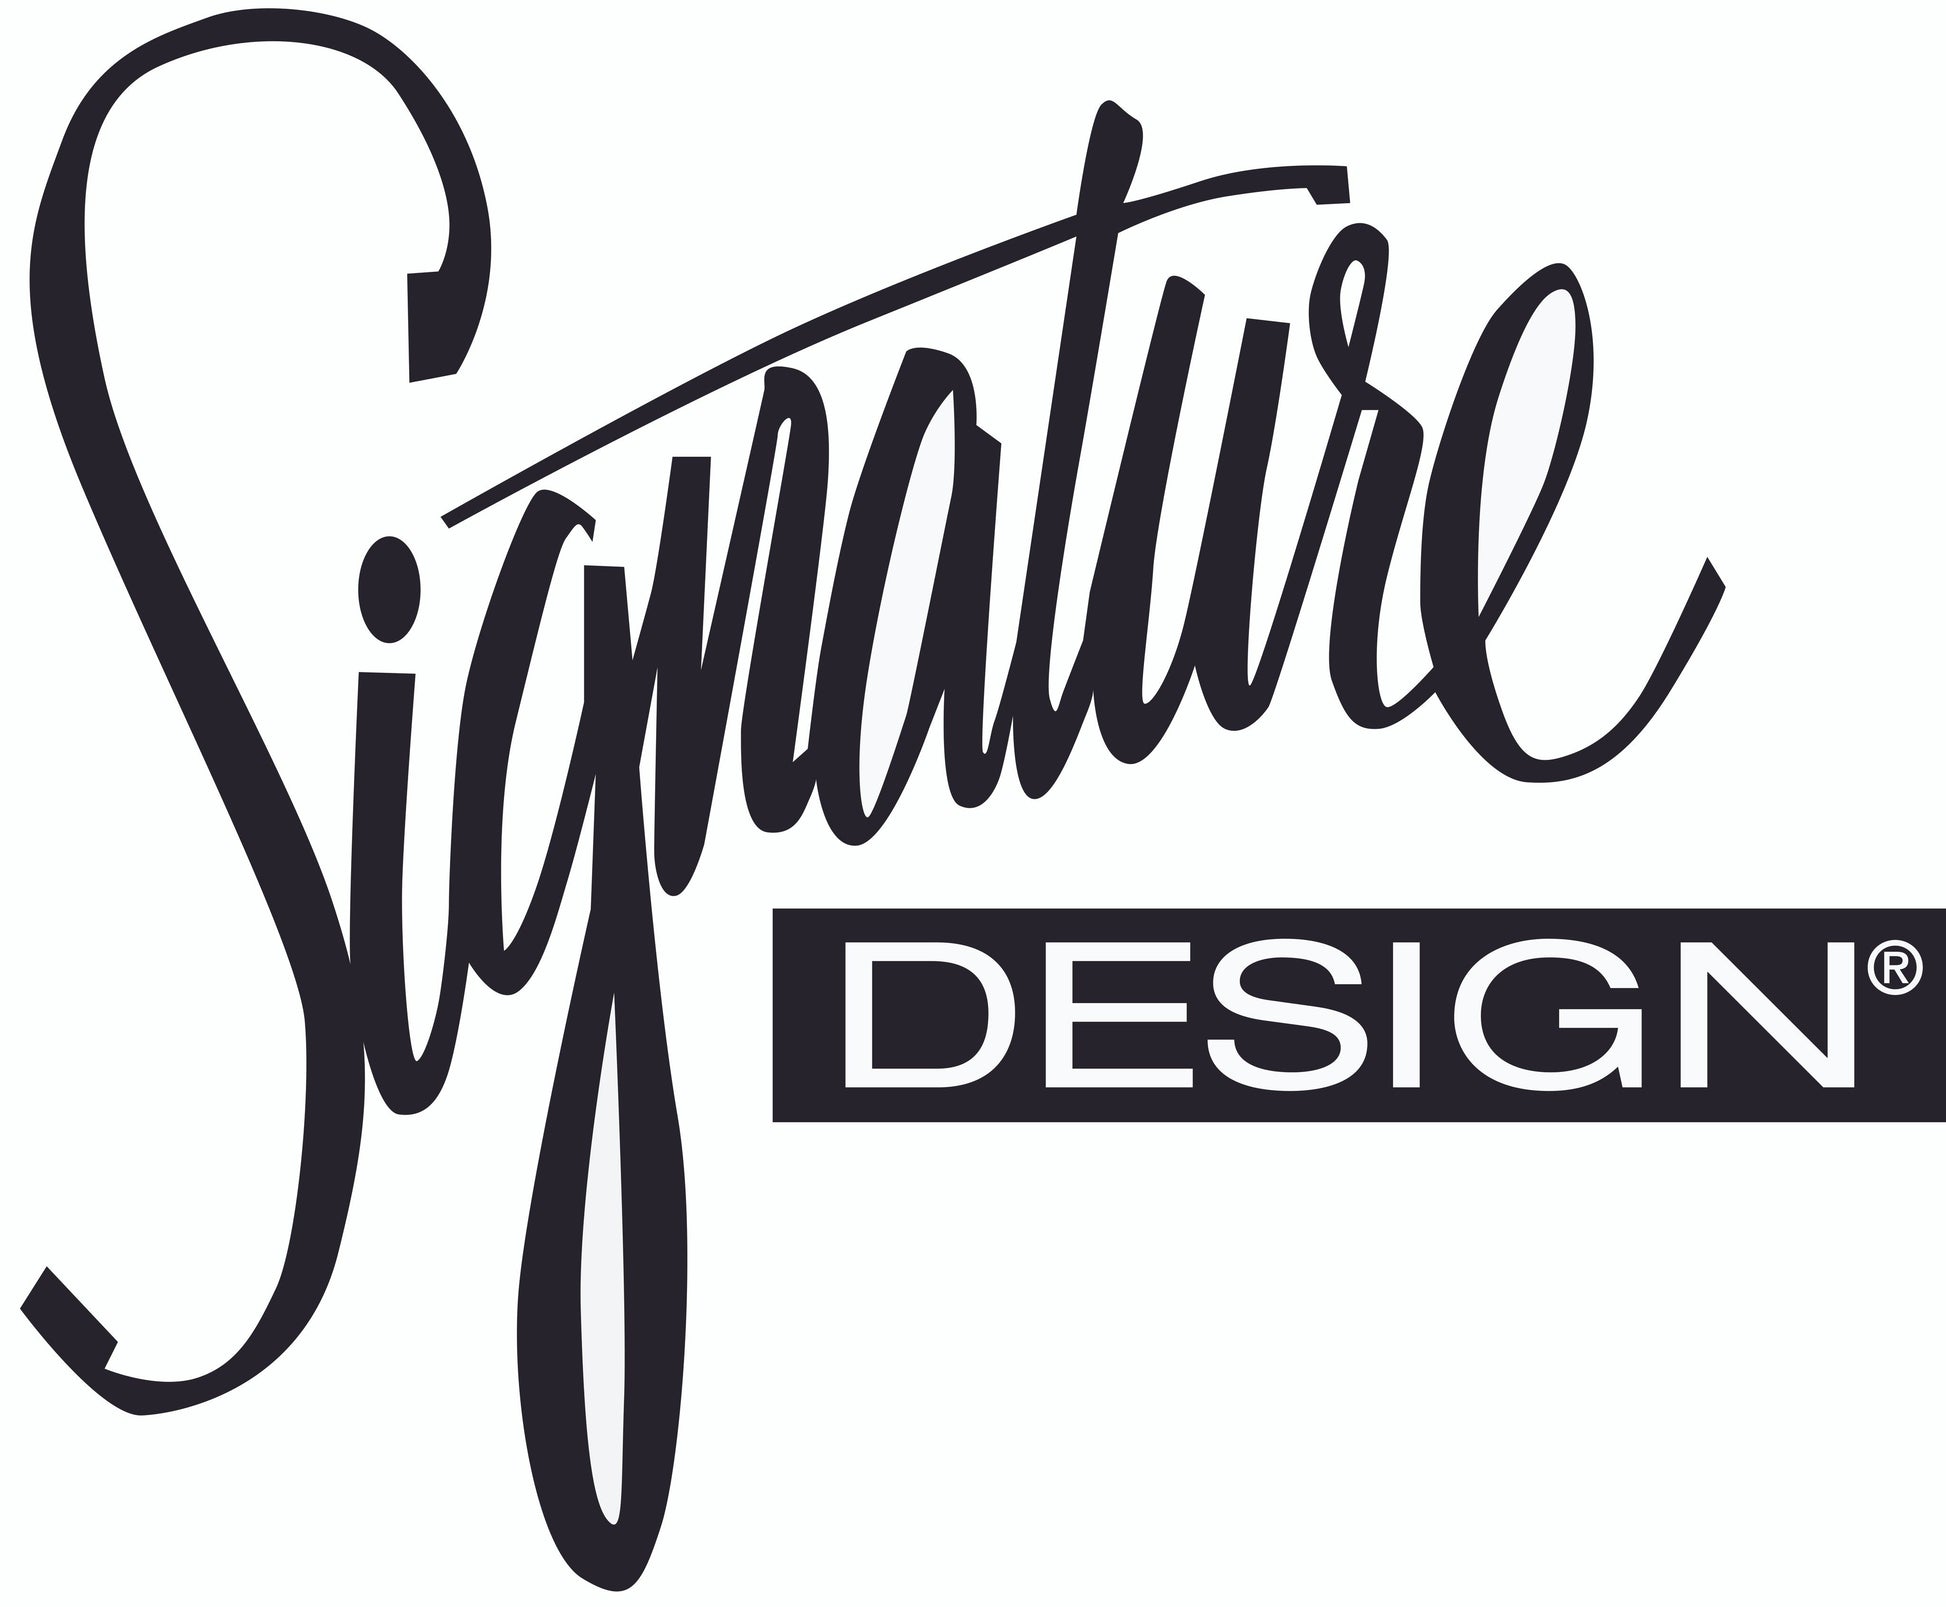 Oliah Storage Bench Signature Design by Ashley®